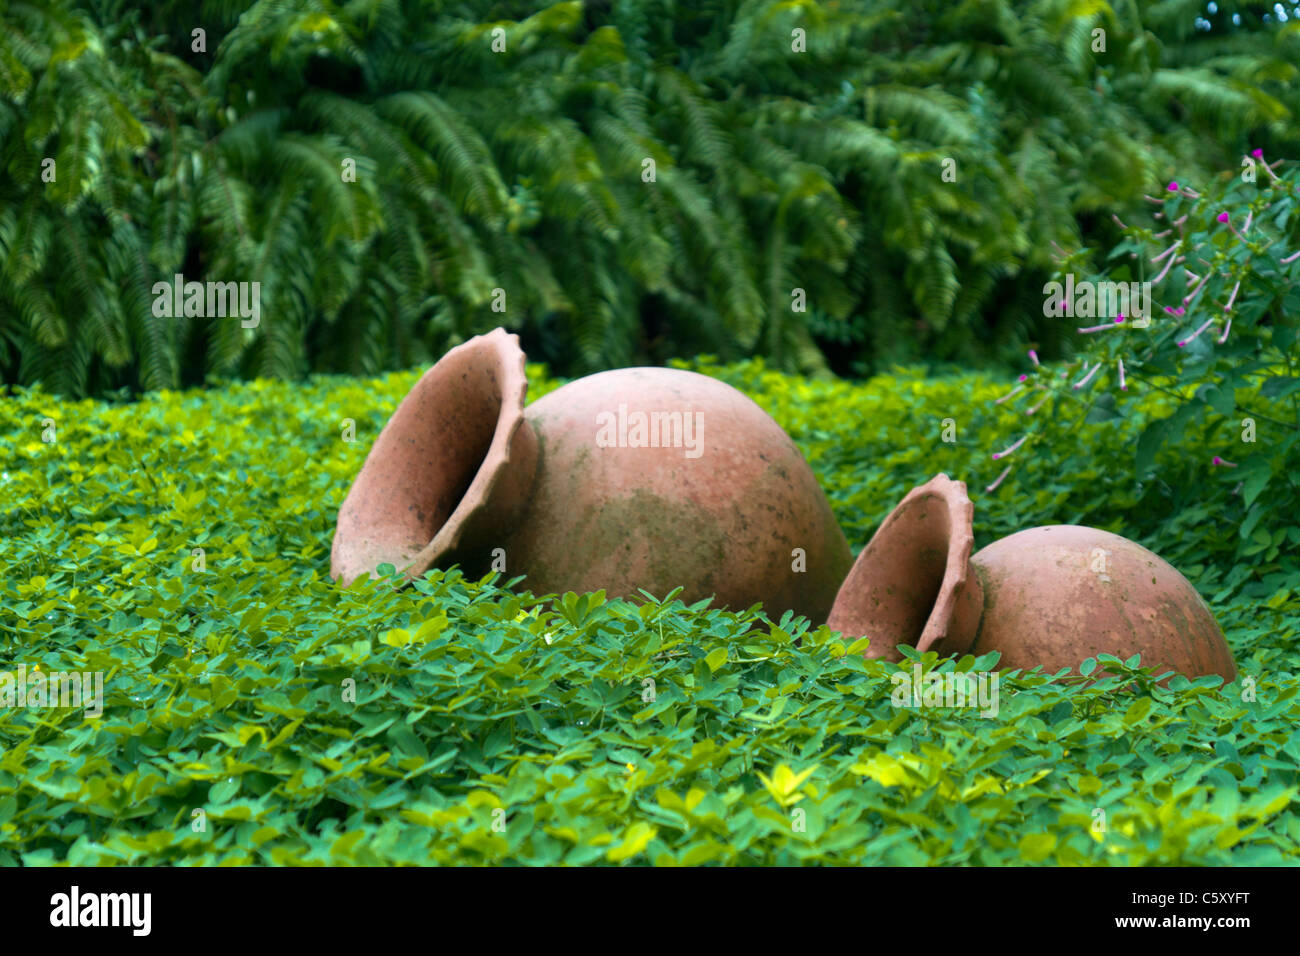 Clay Jars inmersed in greenery Stock Photo